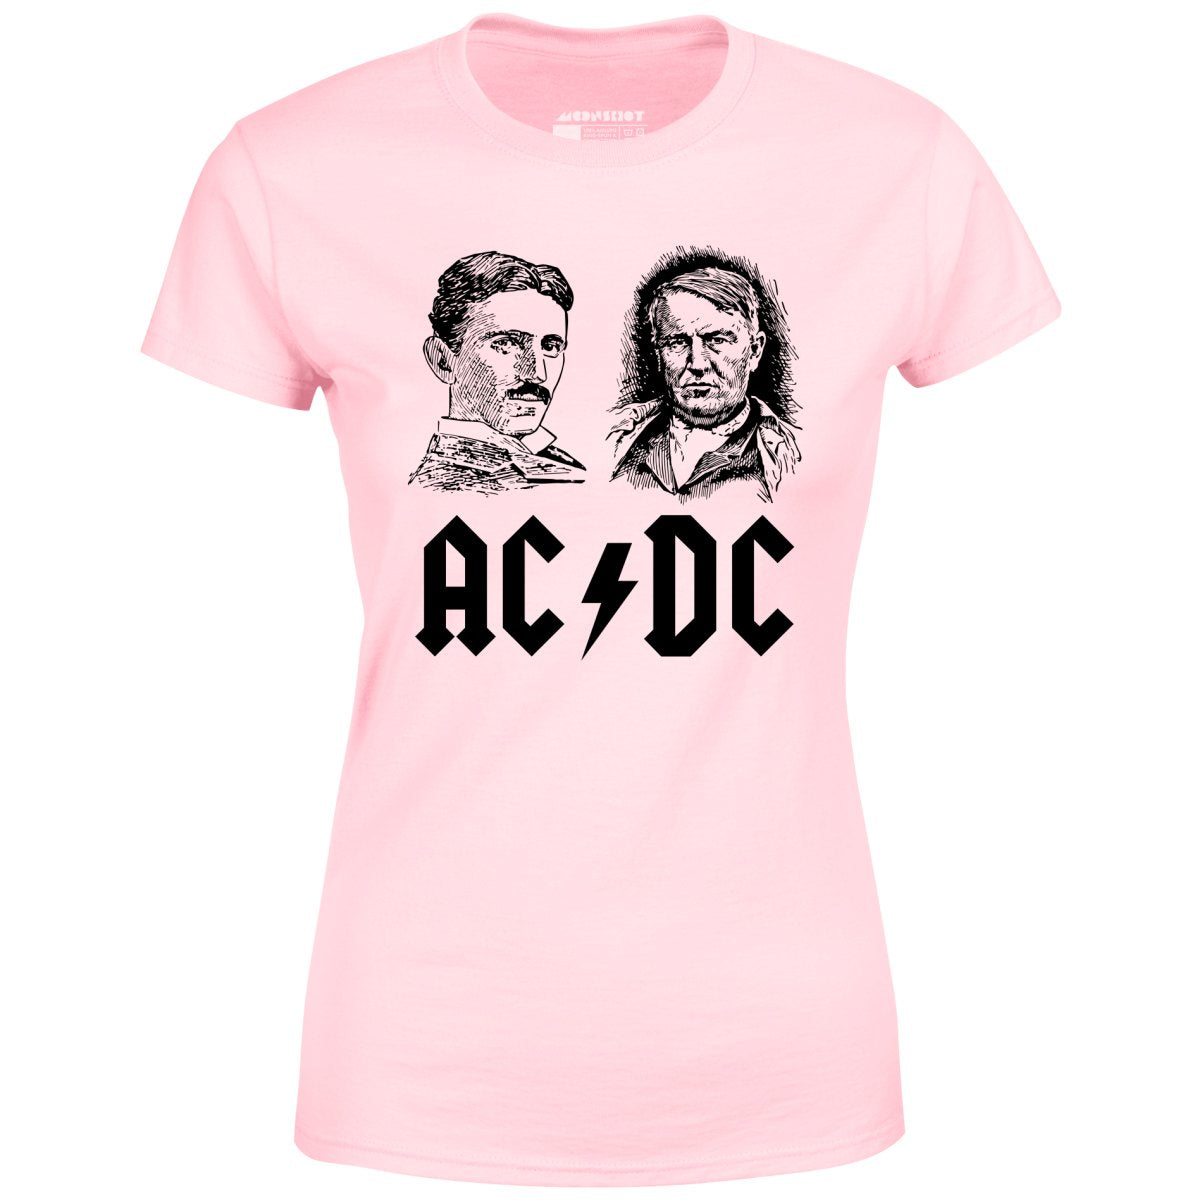 ACDC - Women's T-Shirt